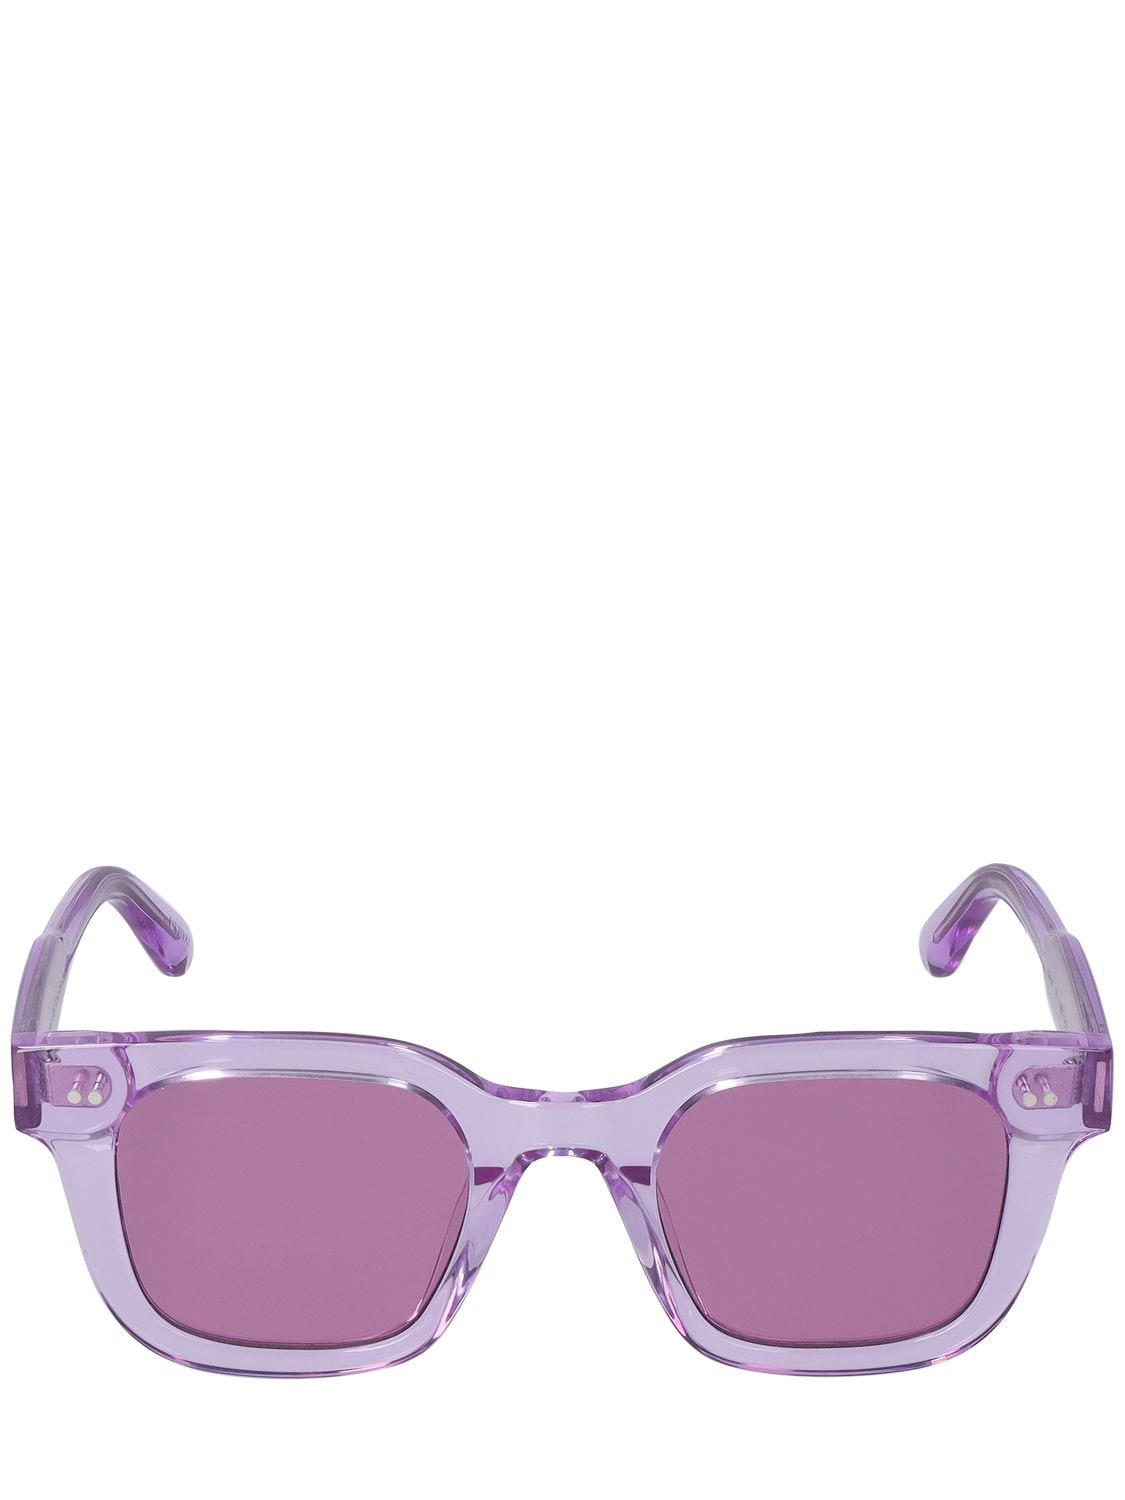 Chimi Purple 04 Squared Acetate Sunglasses